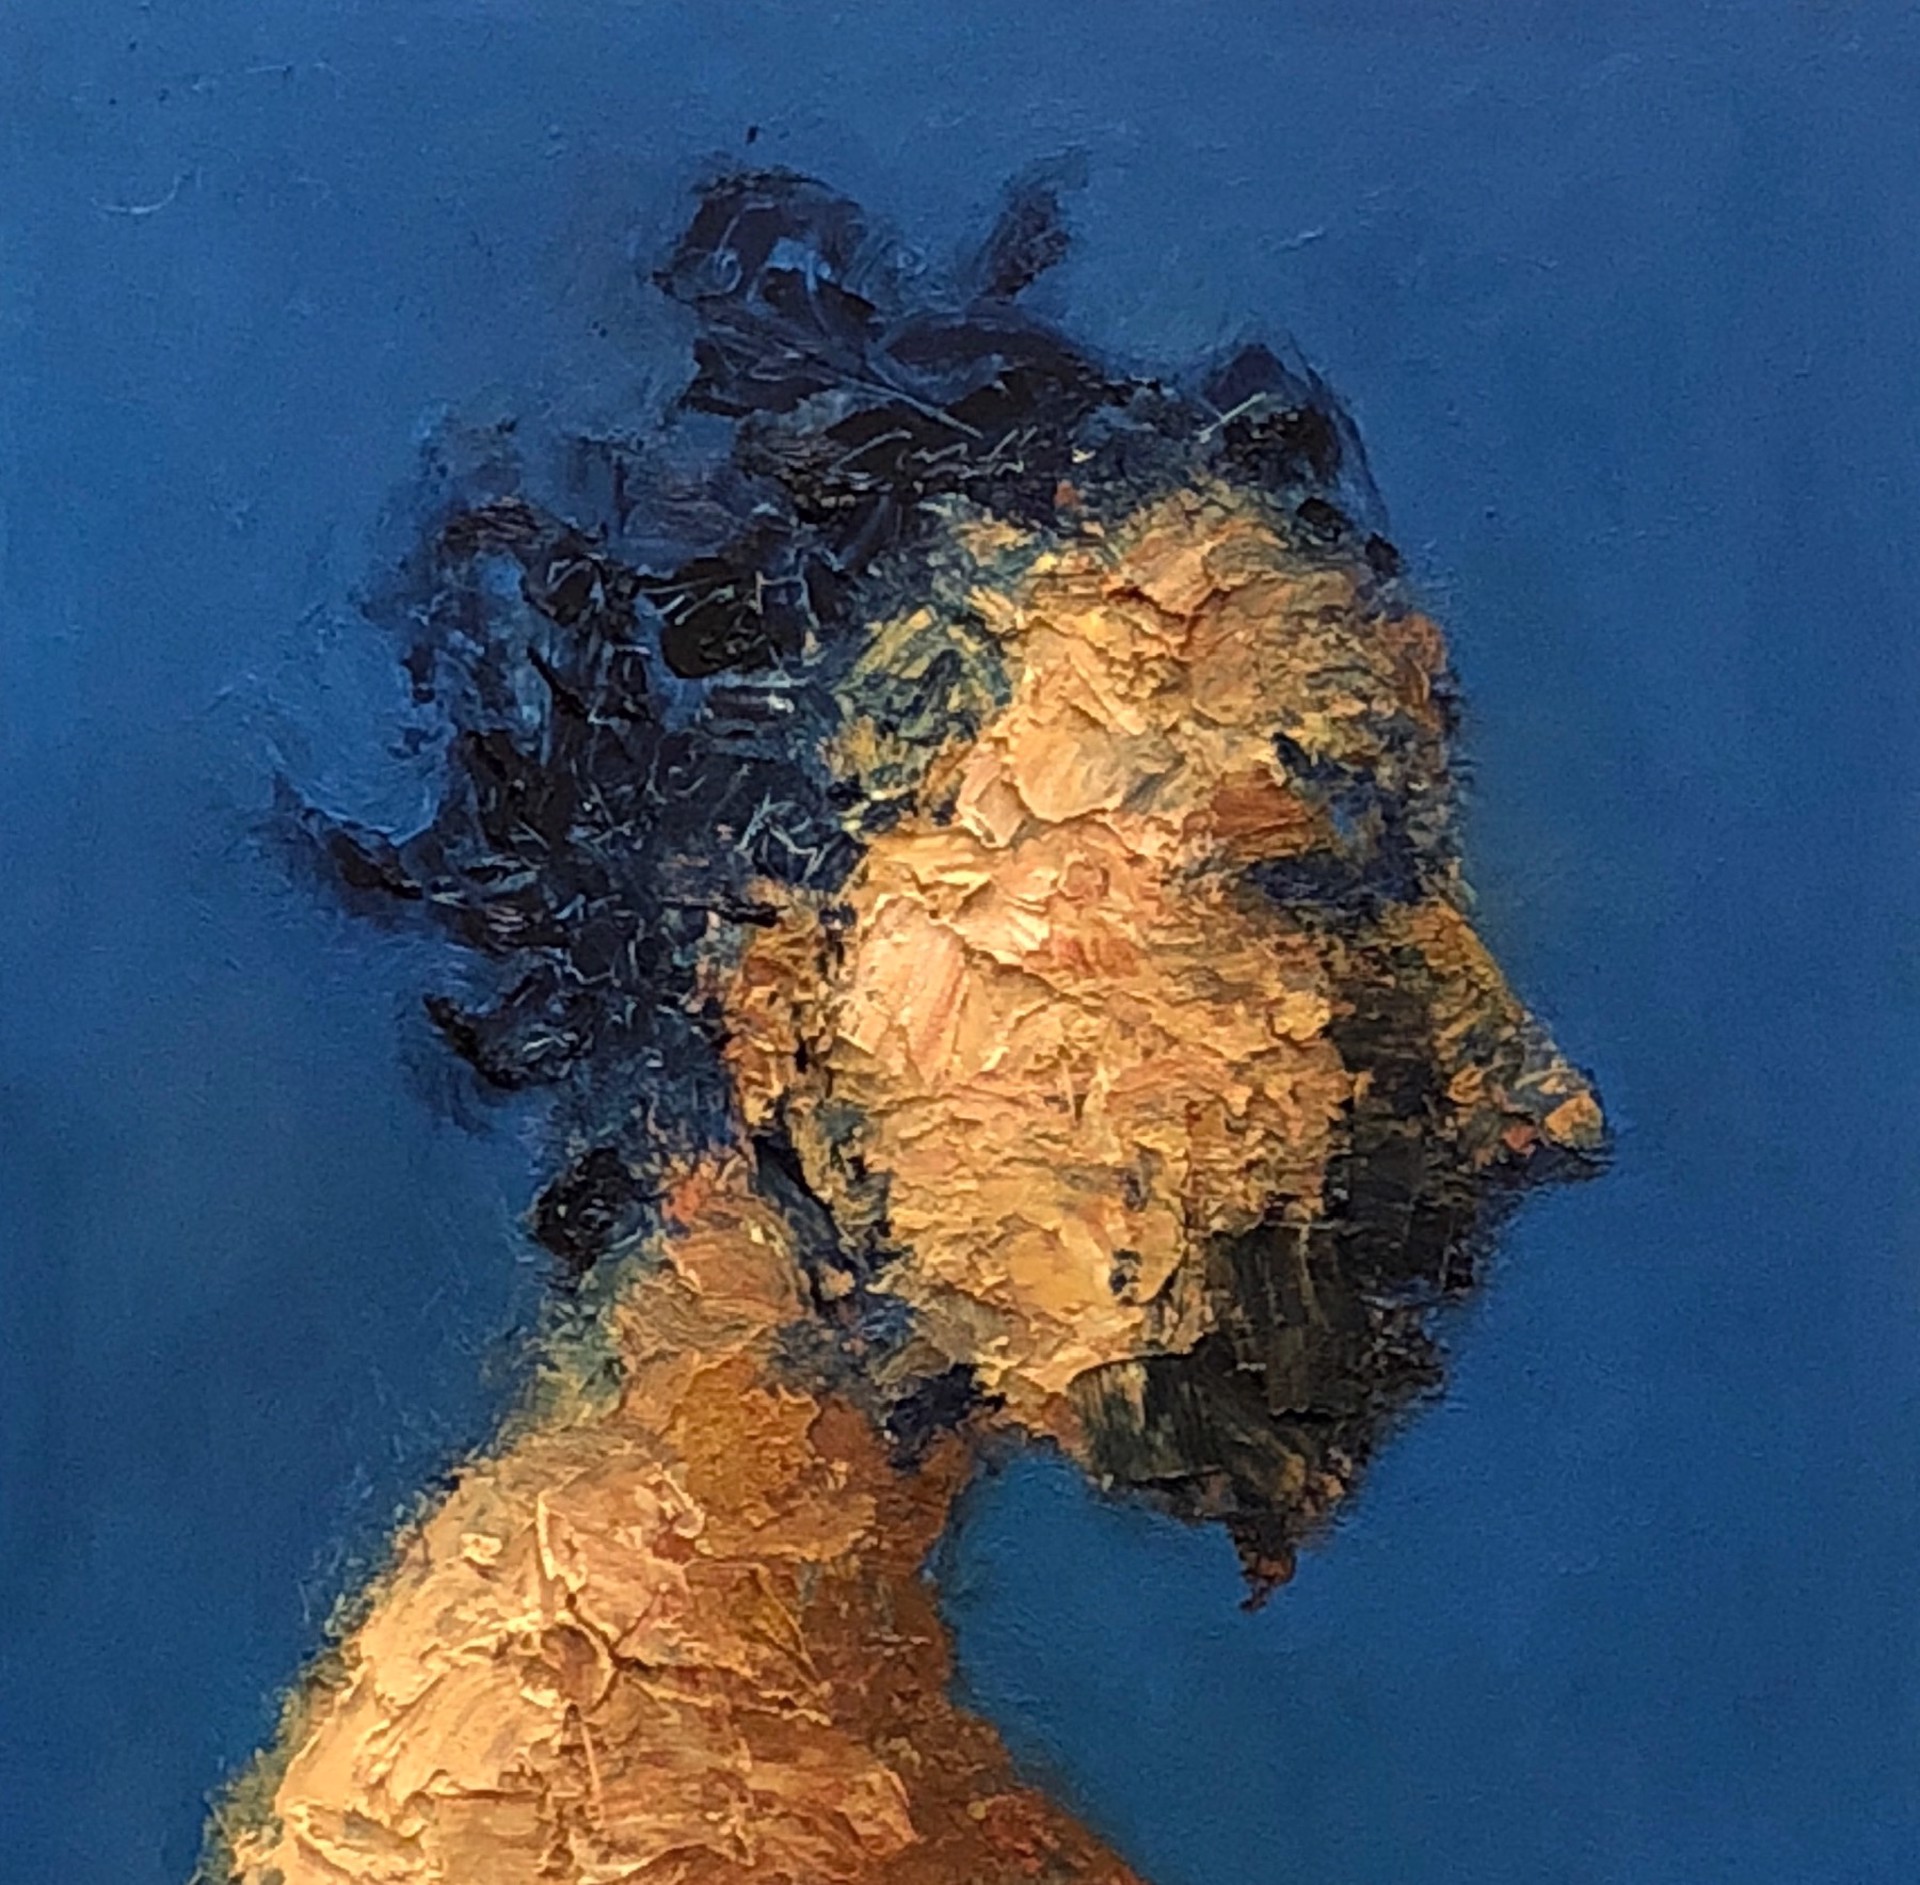 Head No. 11, 2018 by John Goodman